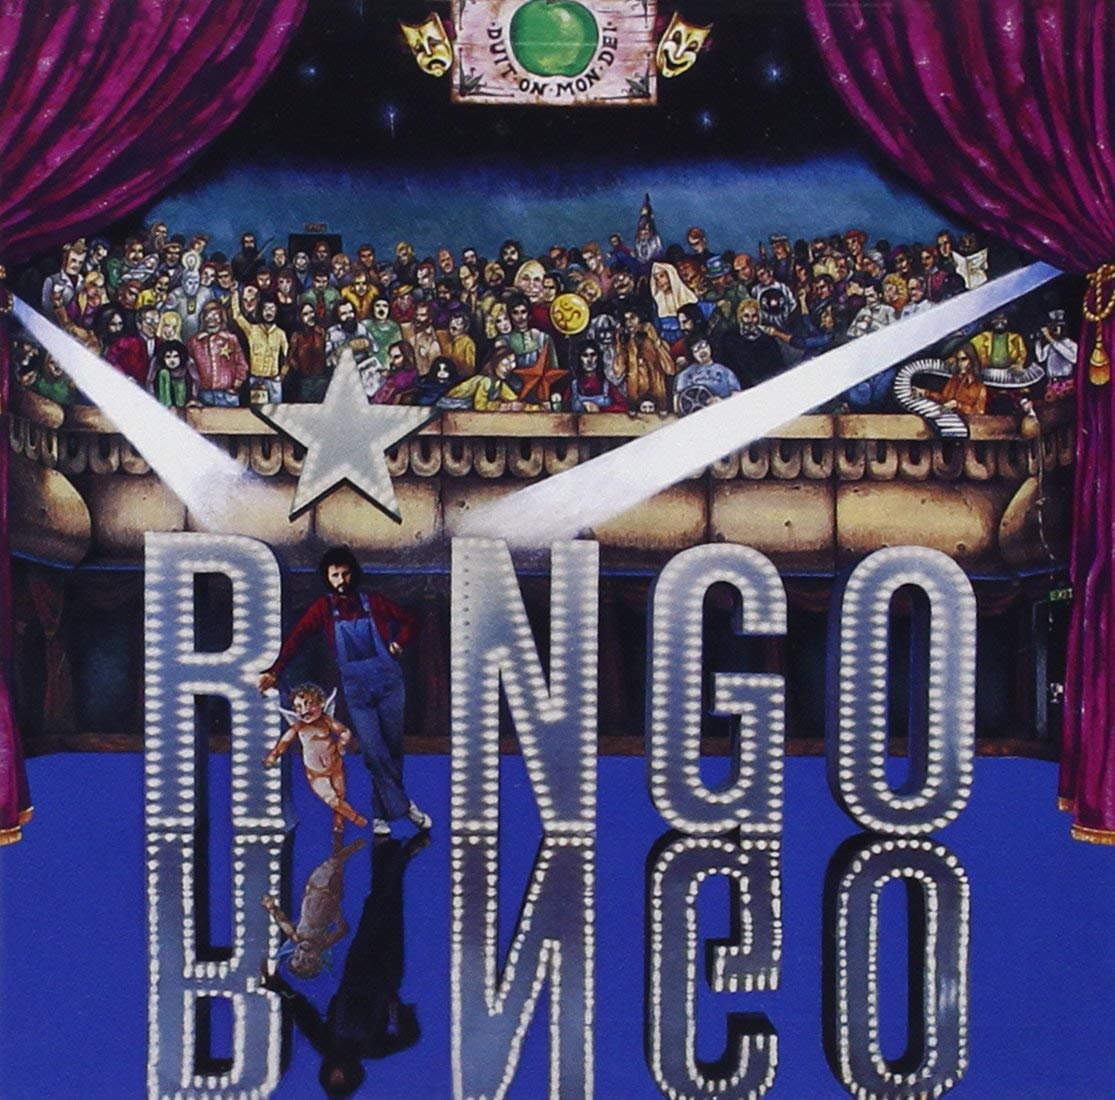 『Ringo』（’73）／Ringo Starr